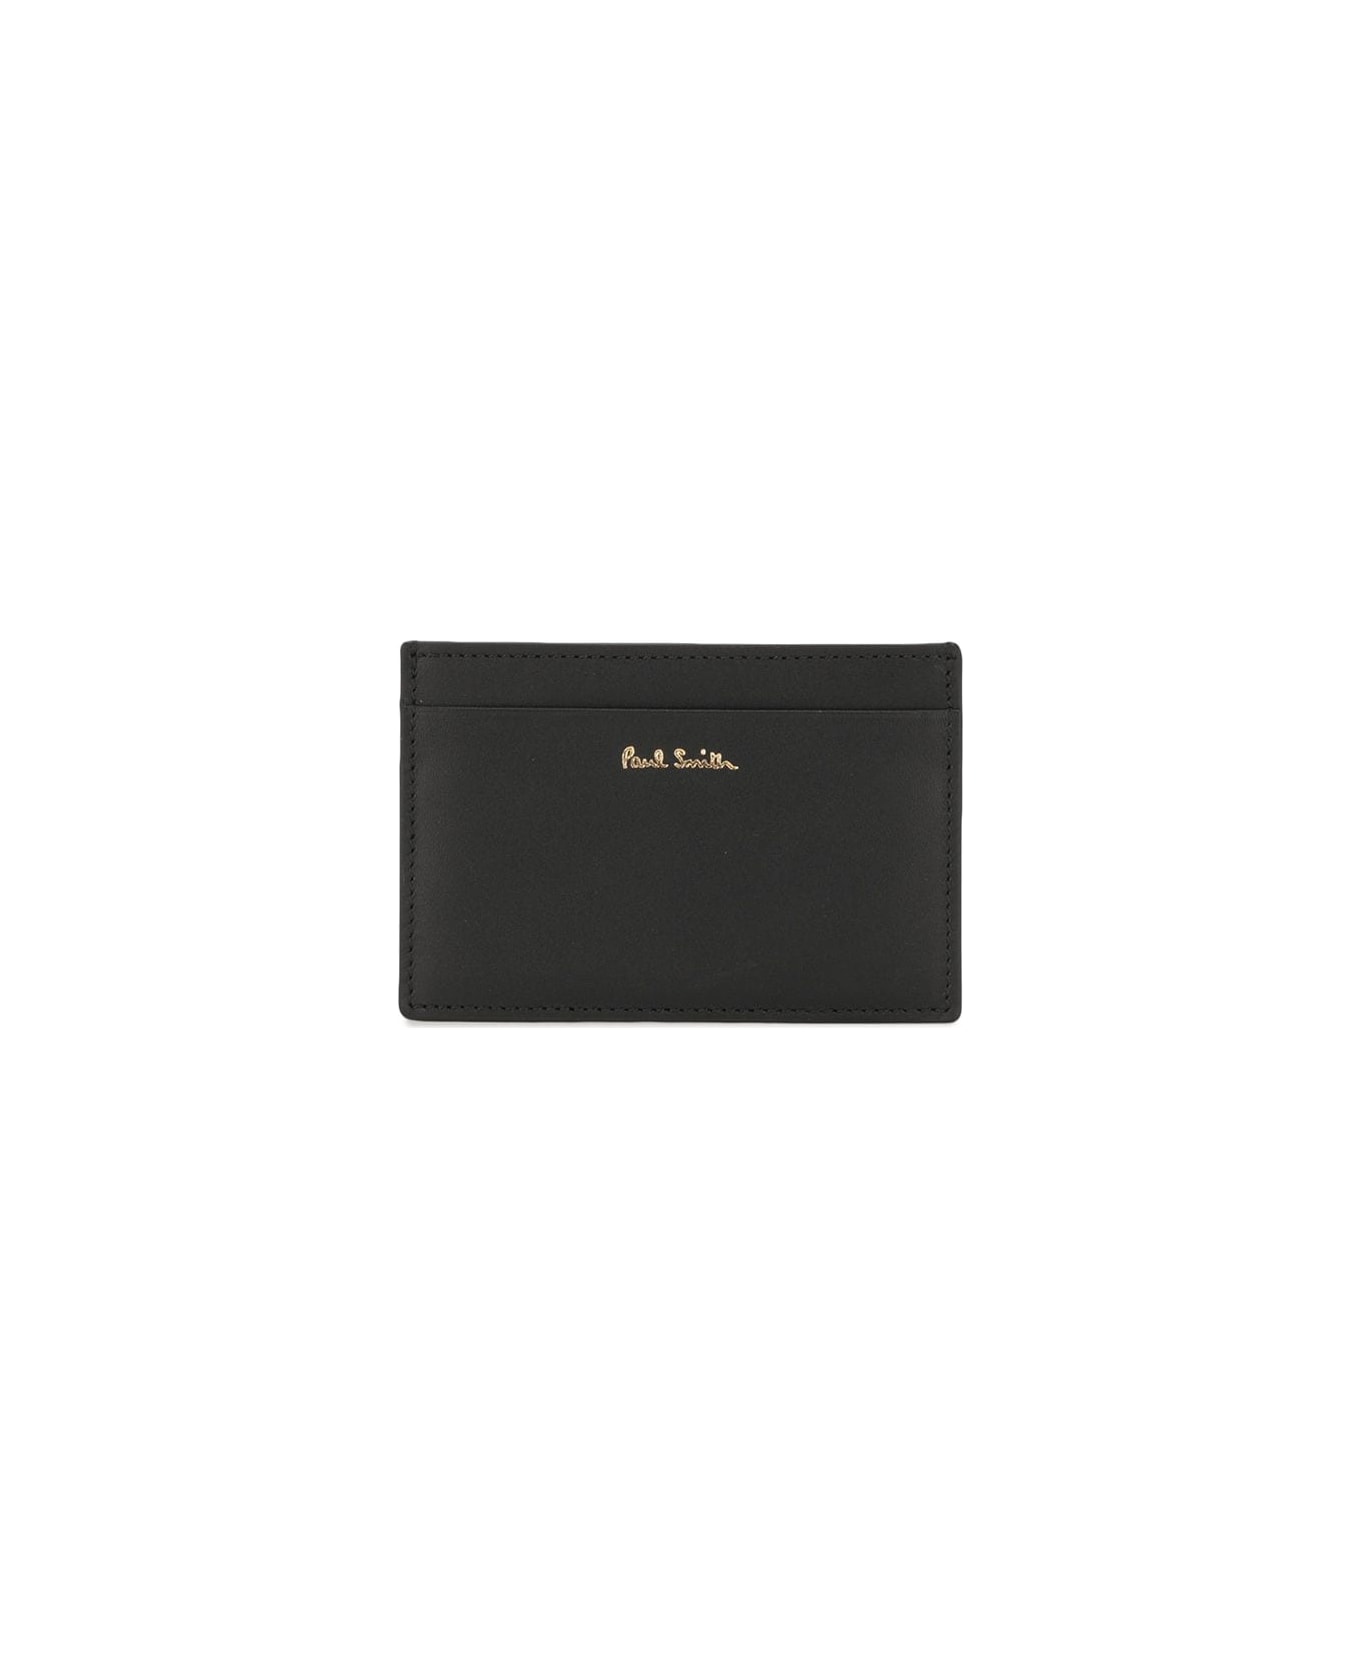 Paul Smith Men Wallet Card Case Intmul - Black 財布